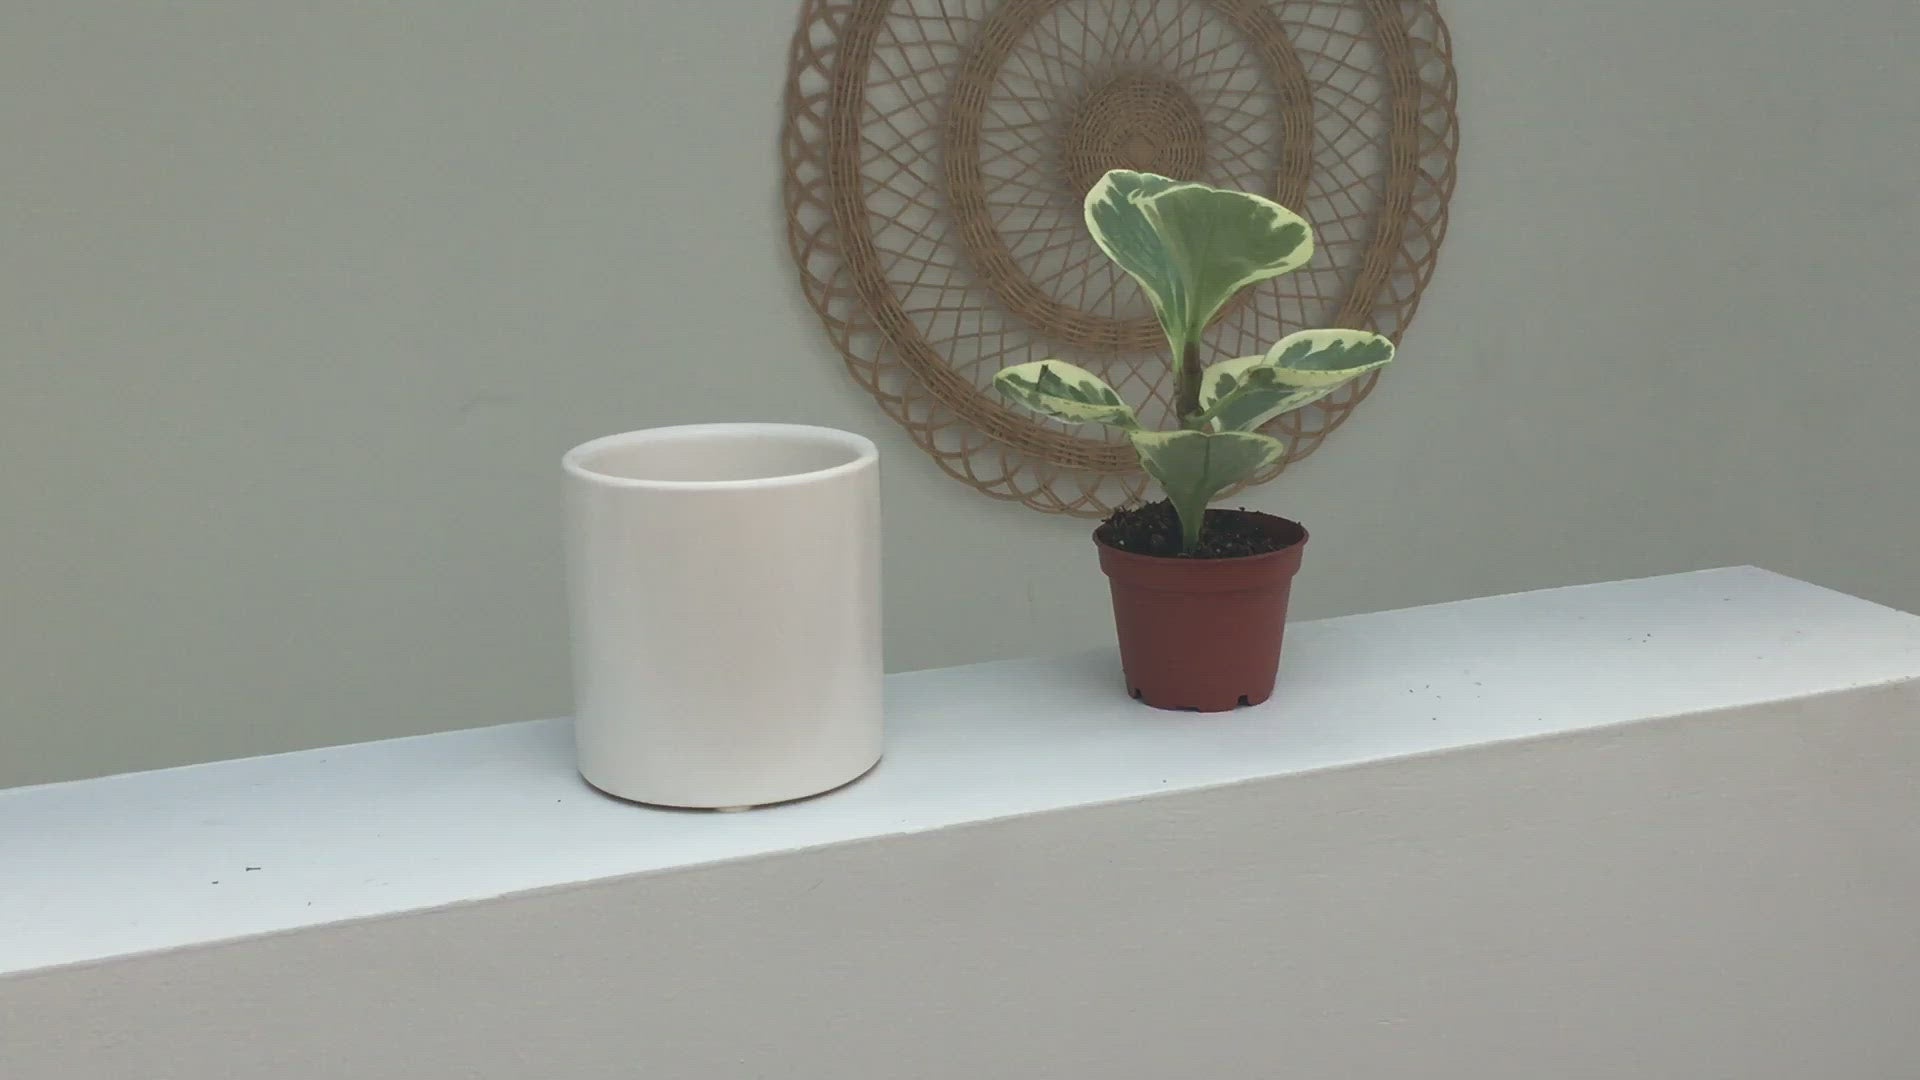 Matte or Glossy White Ceramic Plant Pot - 3" to 10"